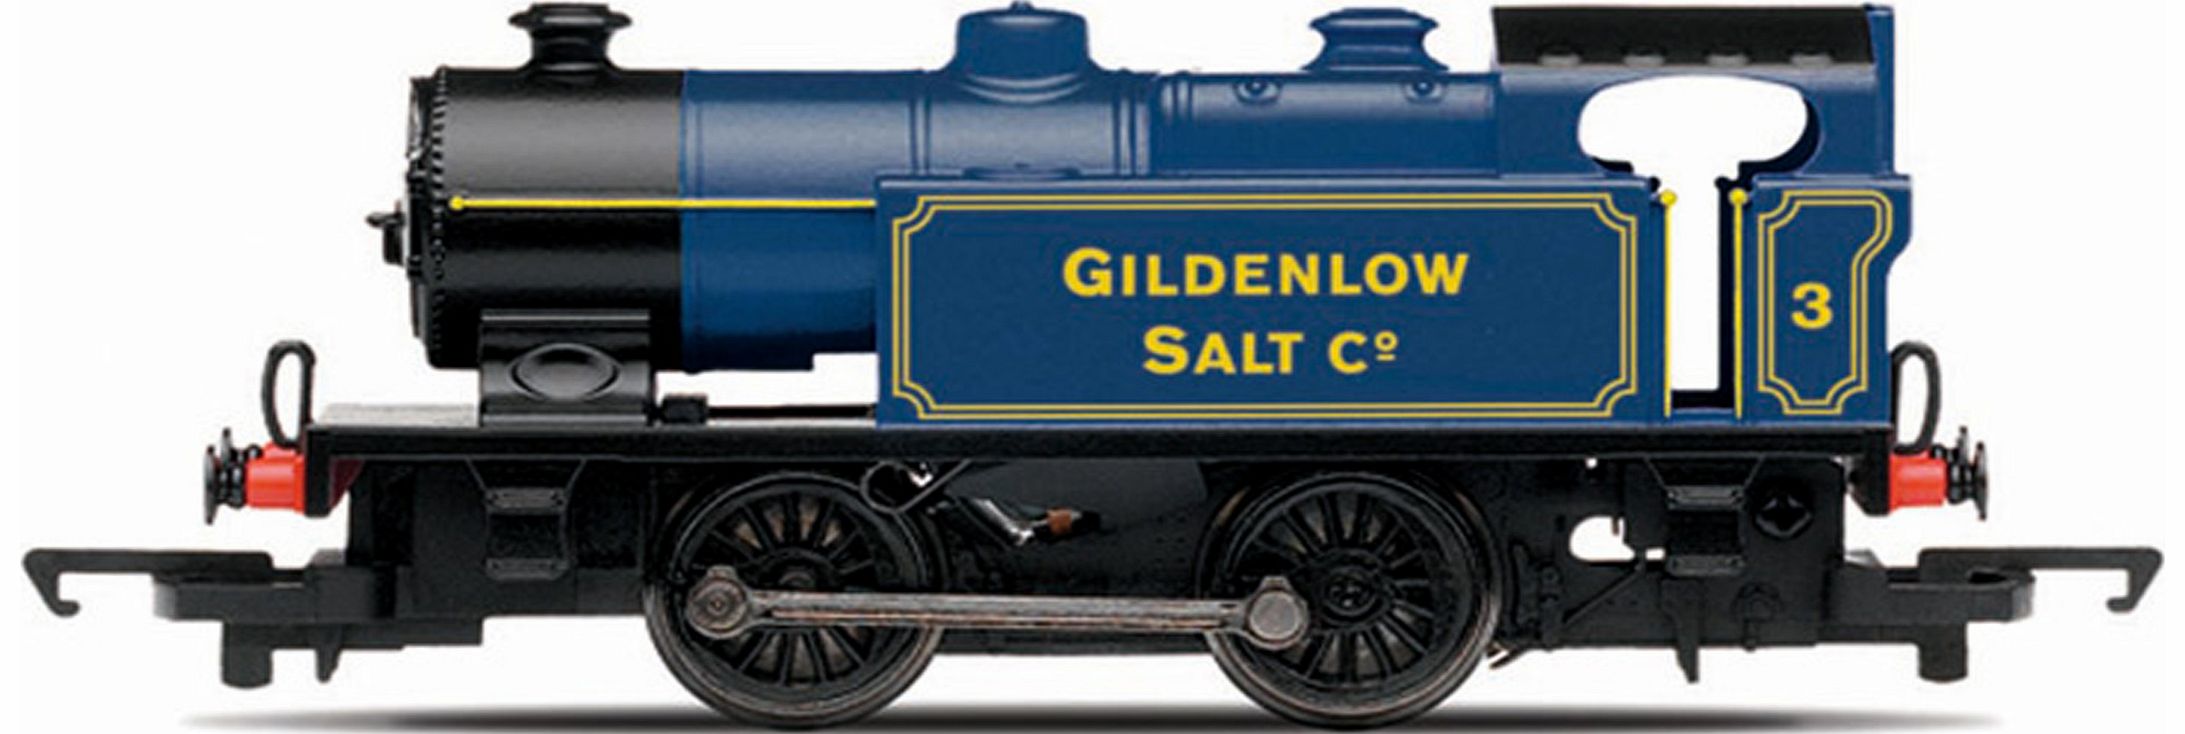 0-4-0 Gildenlow Salt Co.